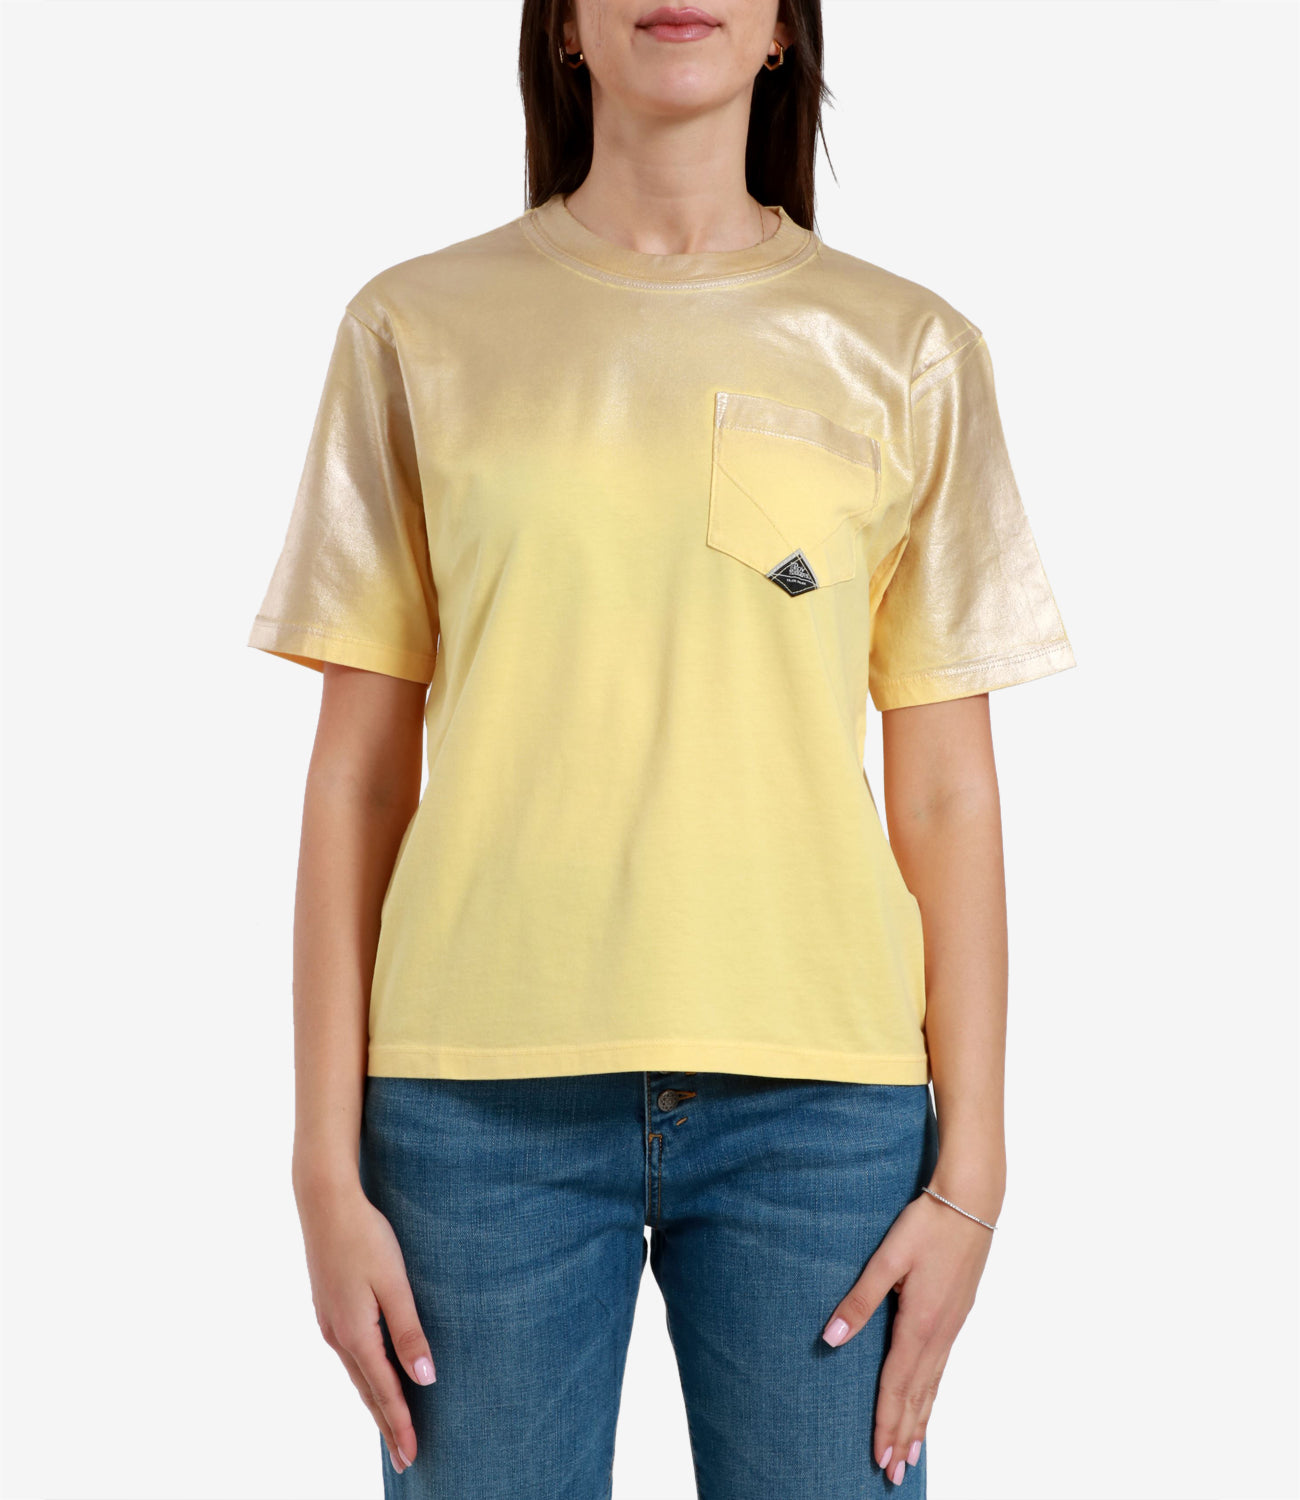 Roy Roger's | T-Shirt Pocket Lamè Giallo